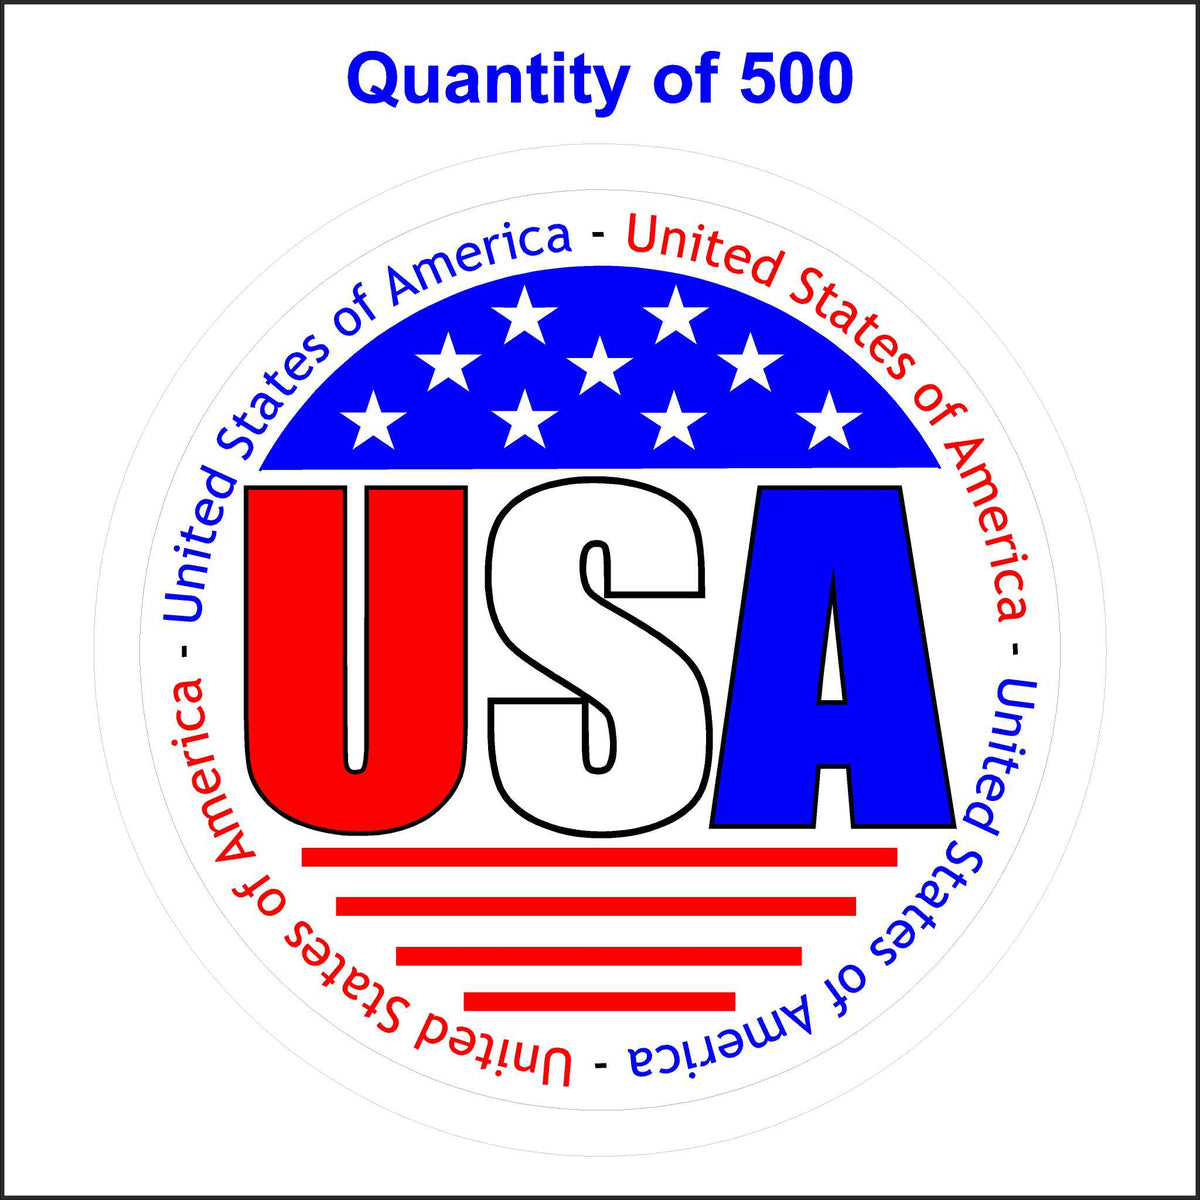 Red, White, and Blue USA Sticker - United States of America Sticker - Patriotic Sticker. 500 Quantity.